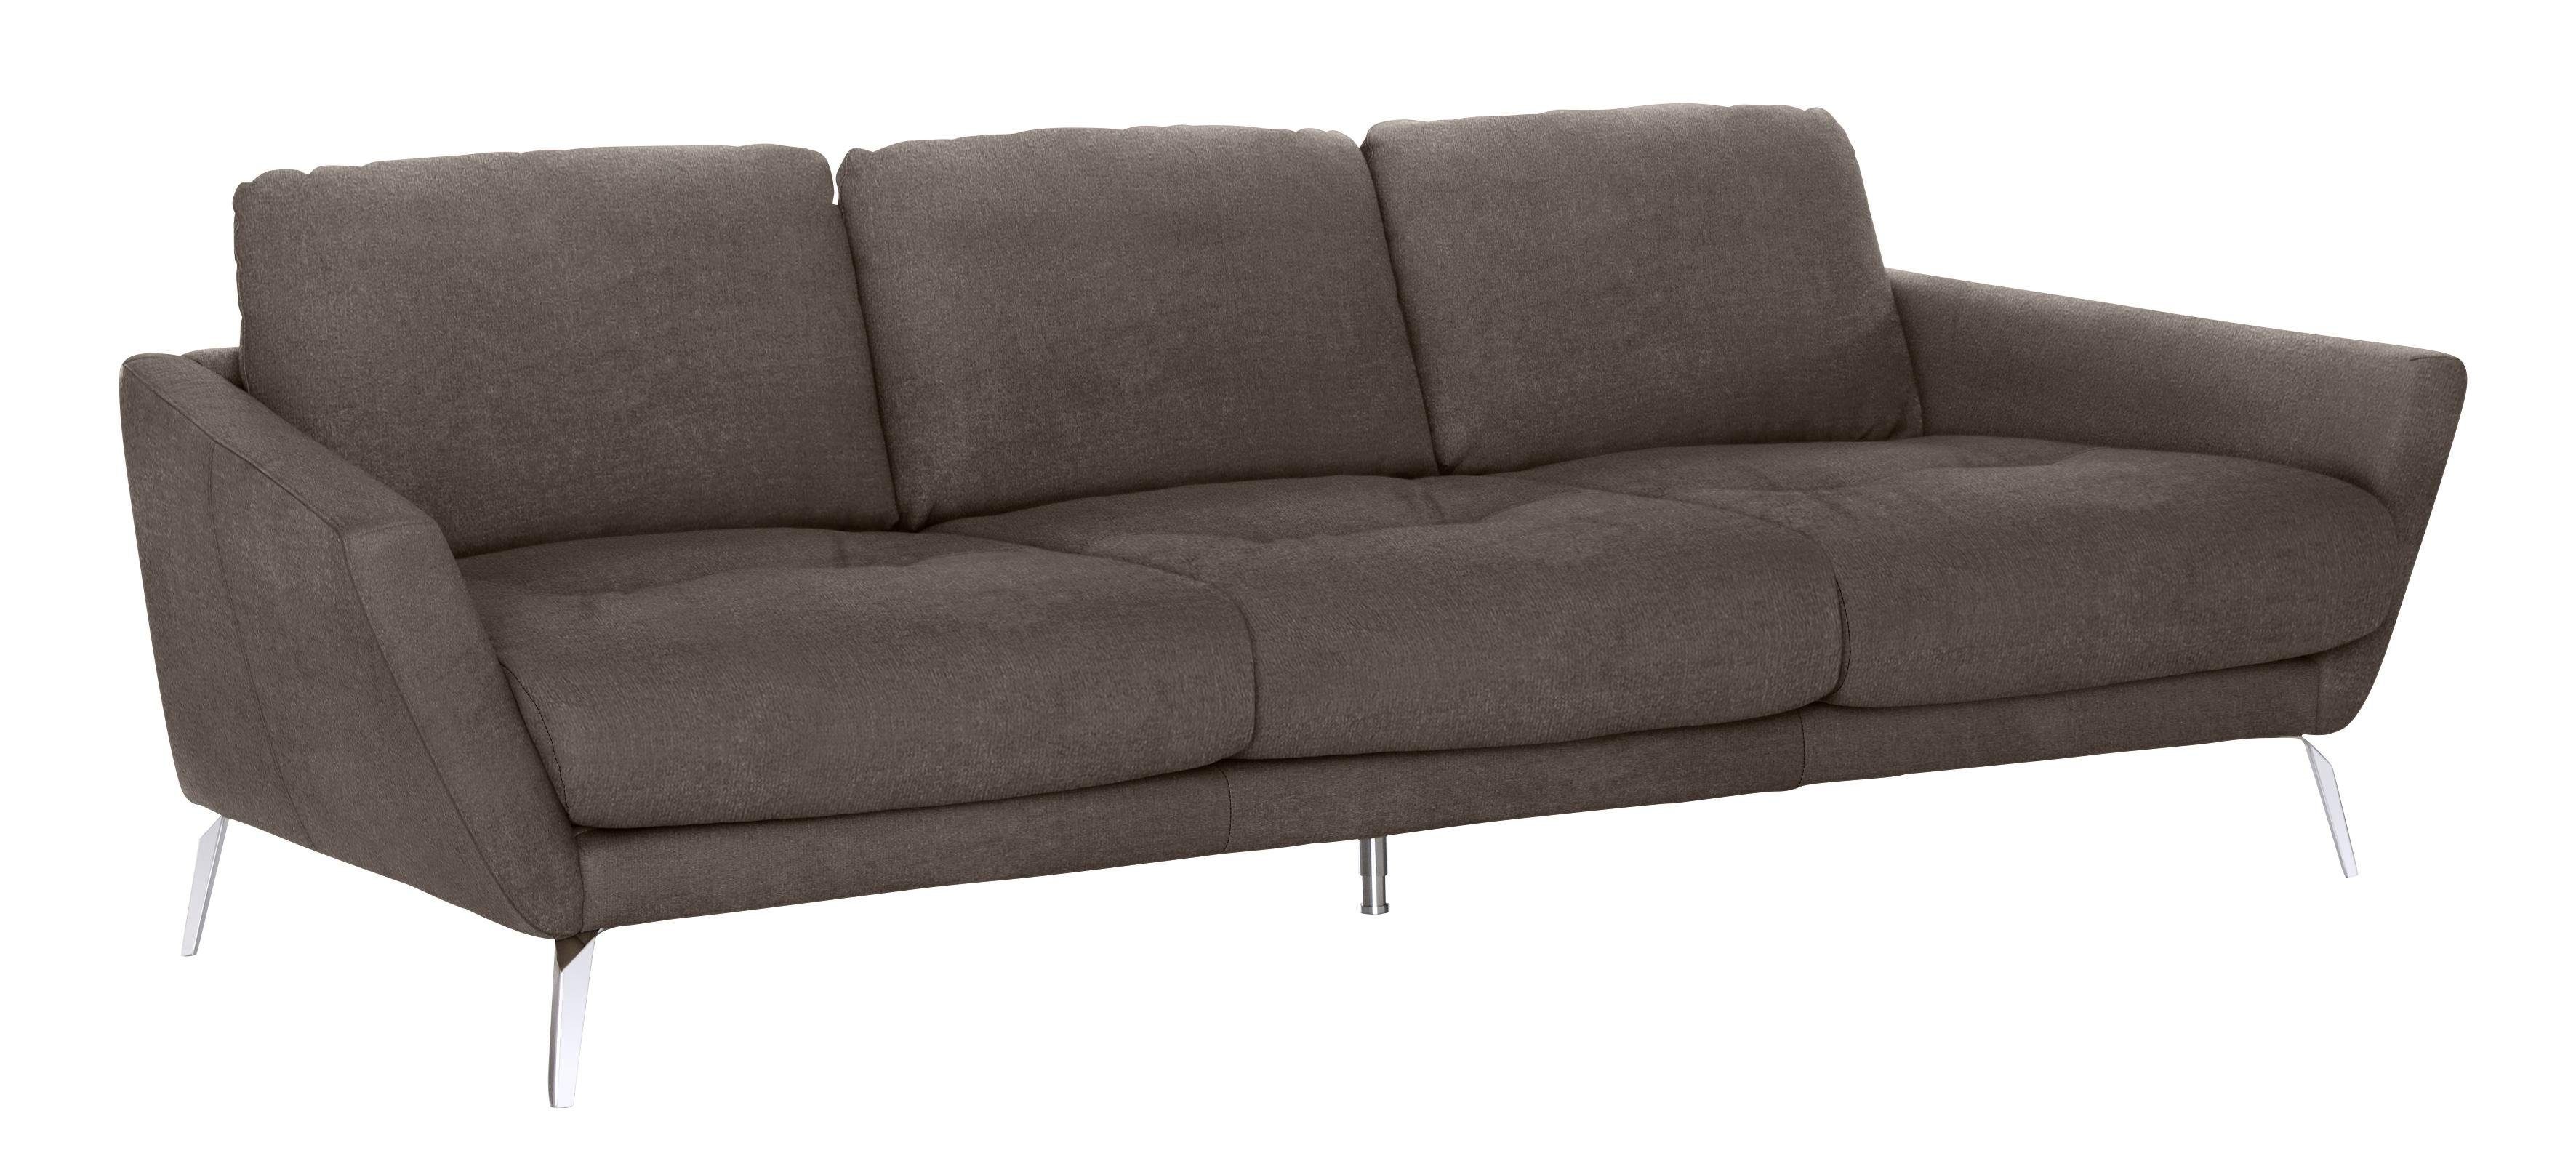 Chrom W.SCHILLIG im Füße Big-Sofa mit Sitz, glänzend dekorativer Heftung softy,